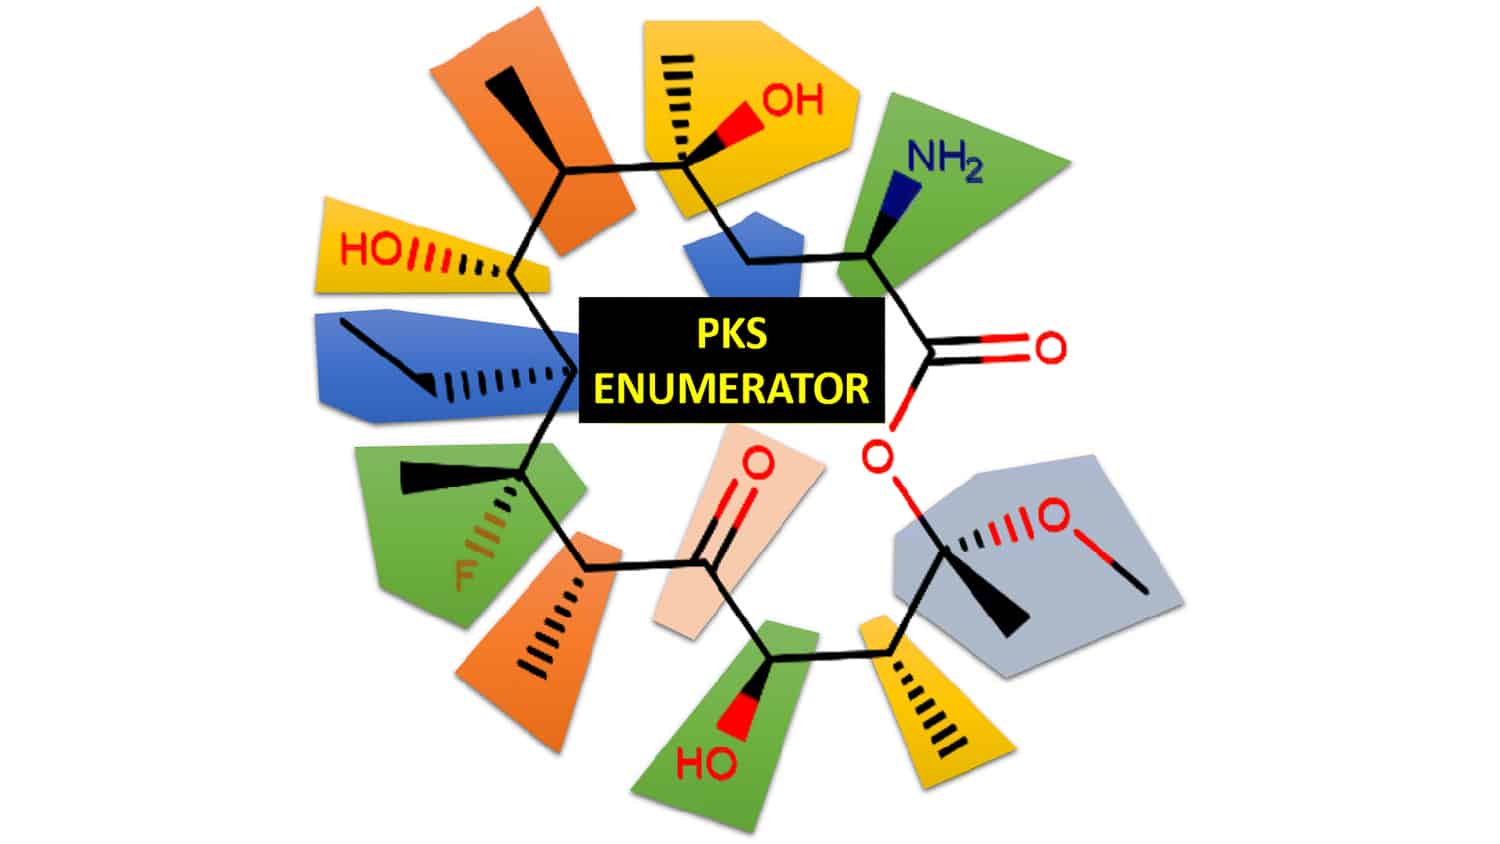 PKS Enumerator software generates new macrolides by permuting key chemical building blocks.